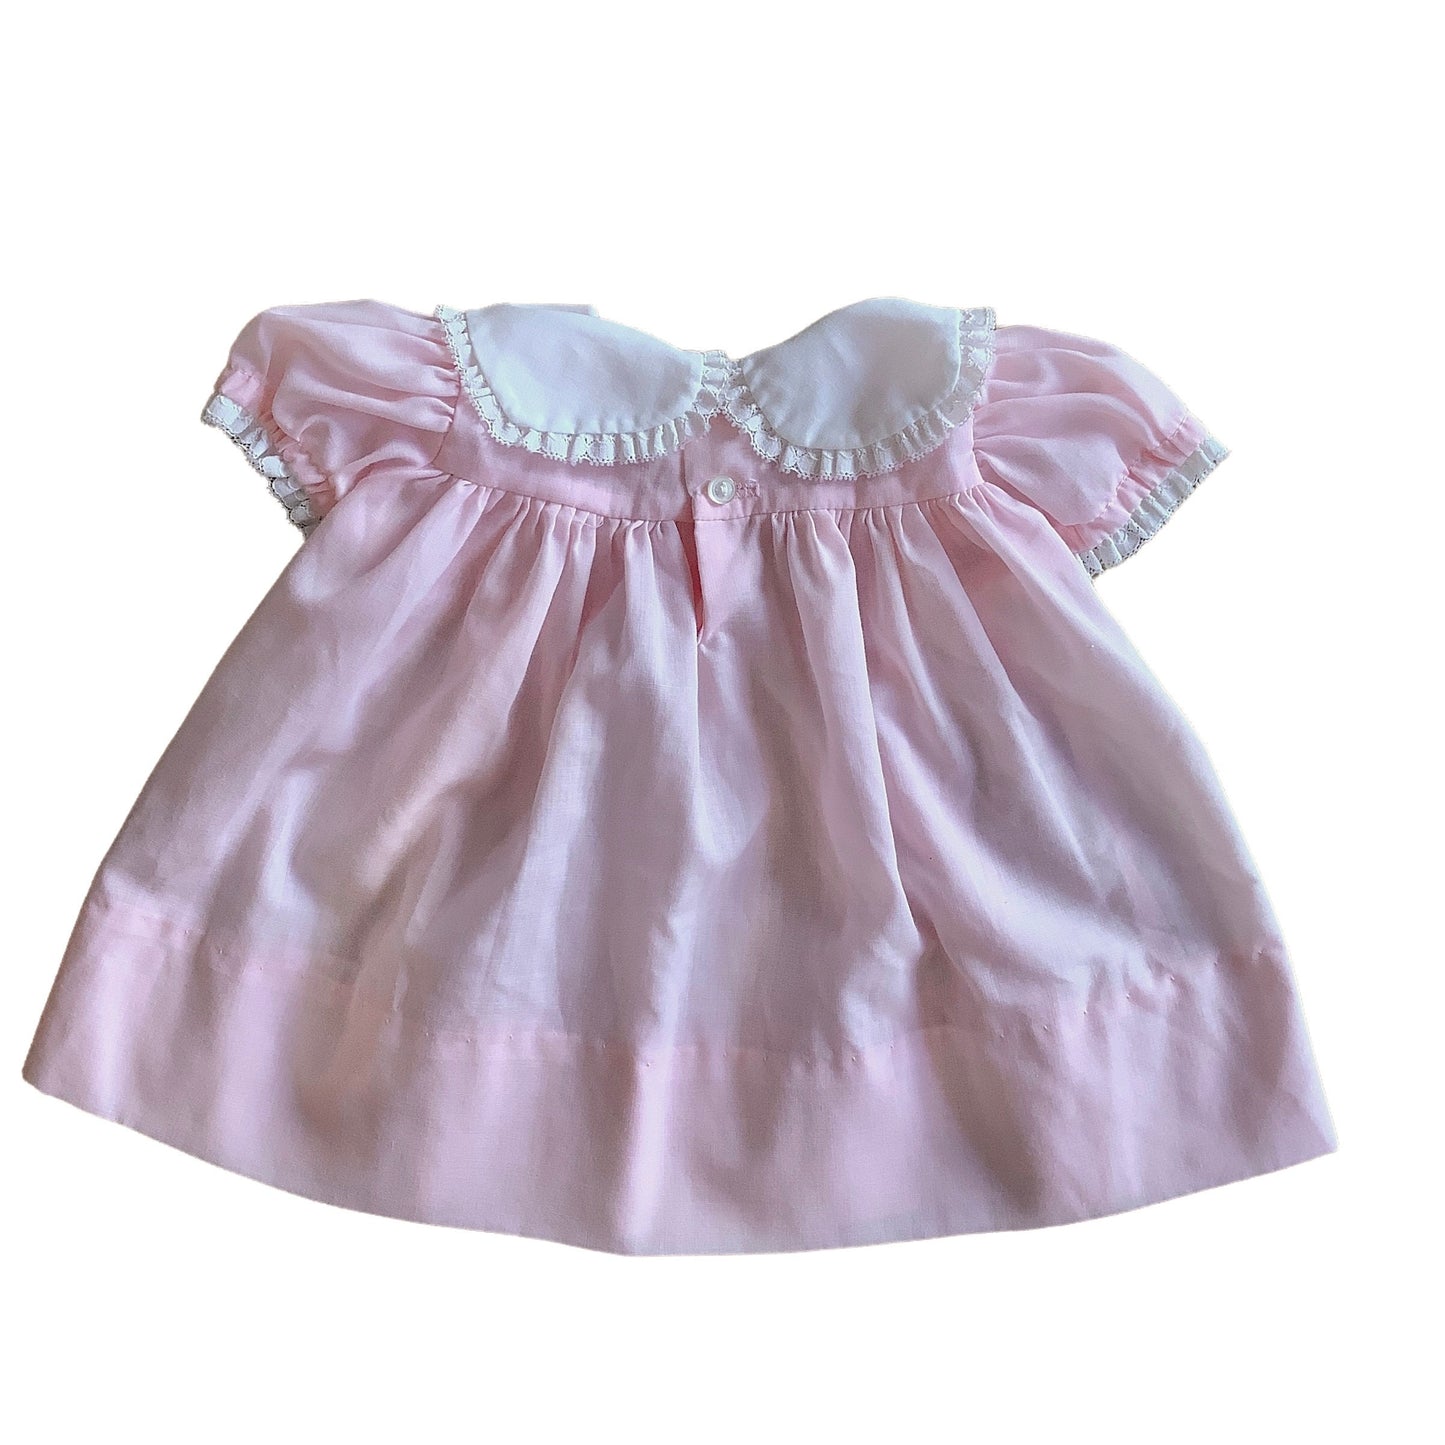 1980s Pink Smock Dress / 0-3 Months